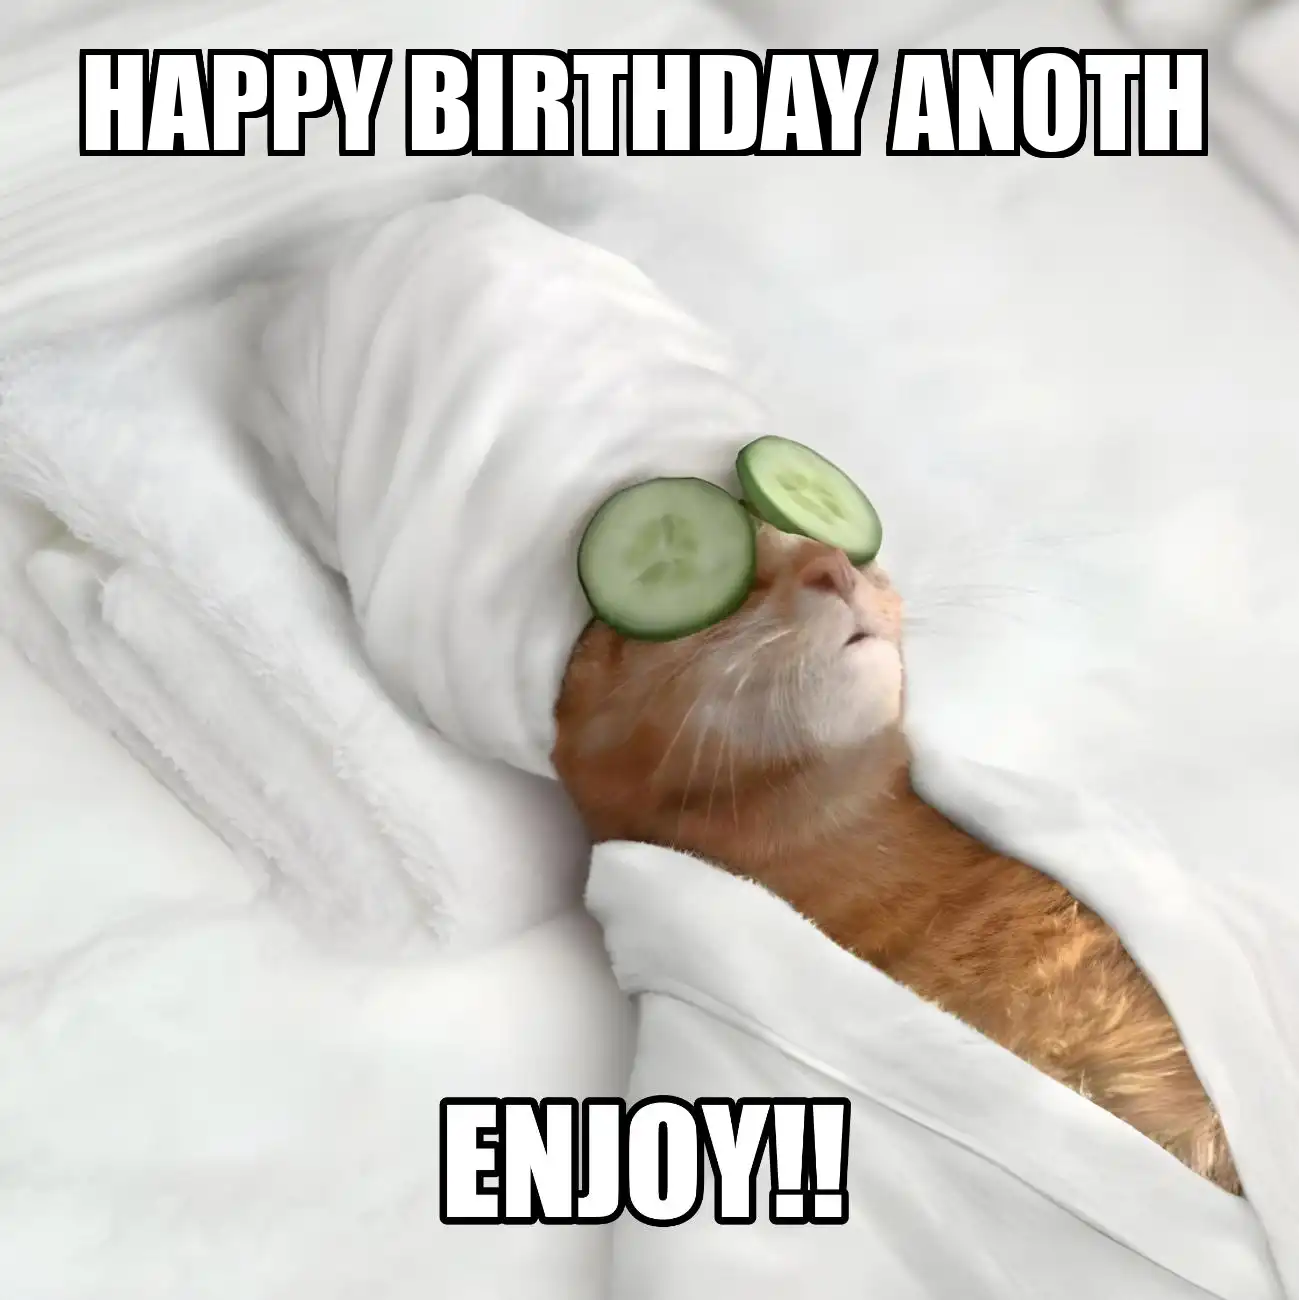 Happy Birthday Anoth Enjoy Cat Meme